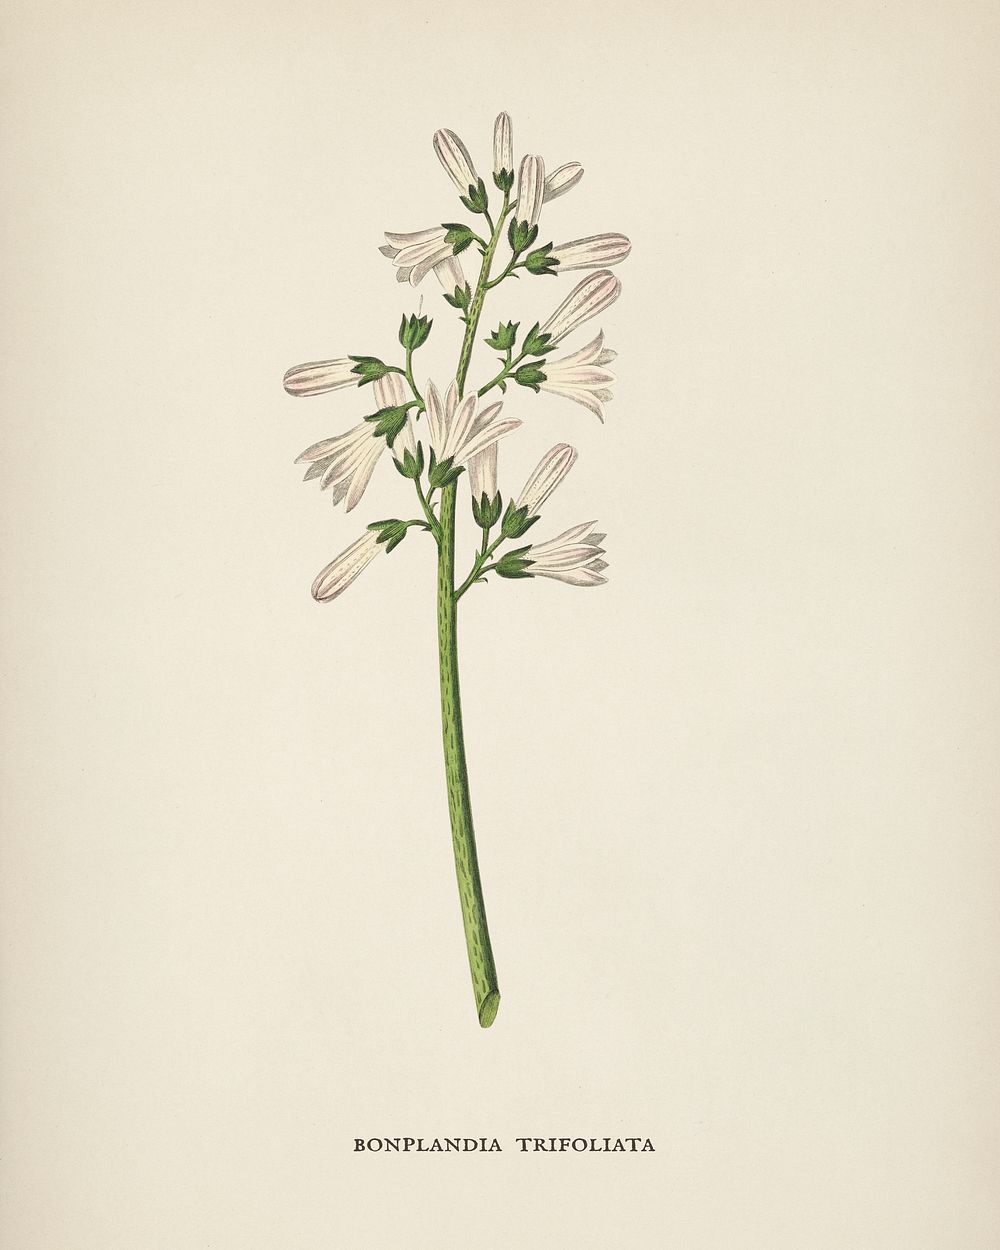 Bonplandia trifoliata illustration from Medical Botany (1836) by John Stephenson and James Morss Churchill.